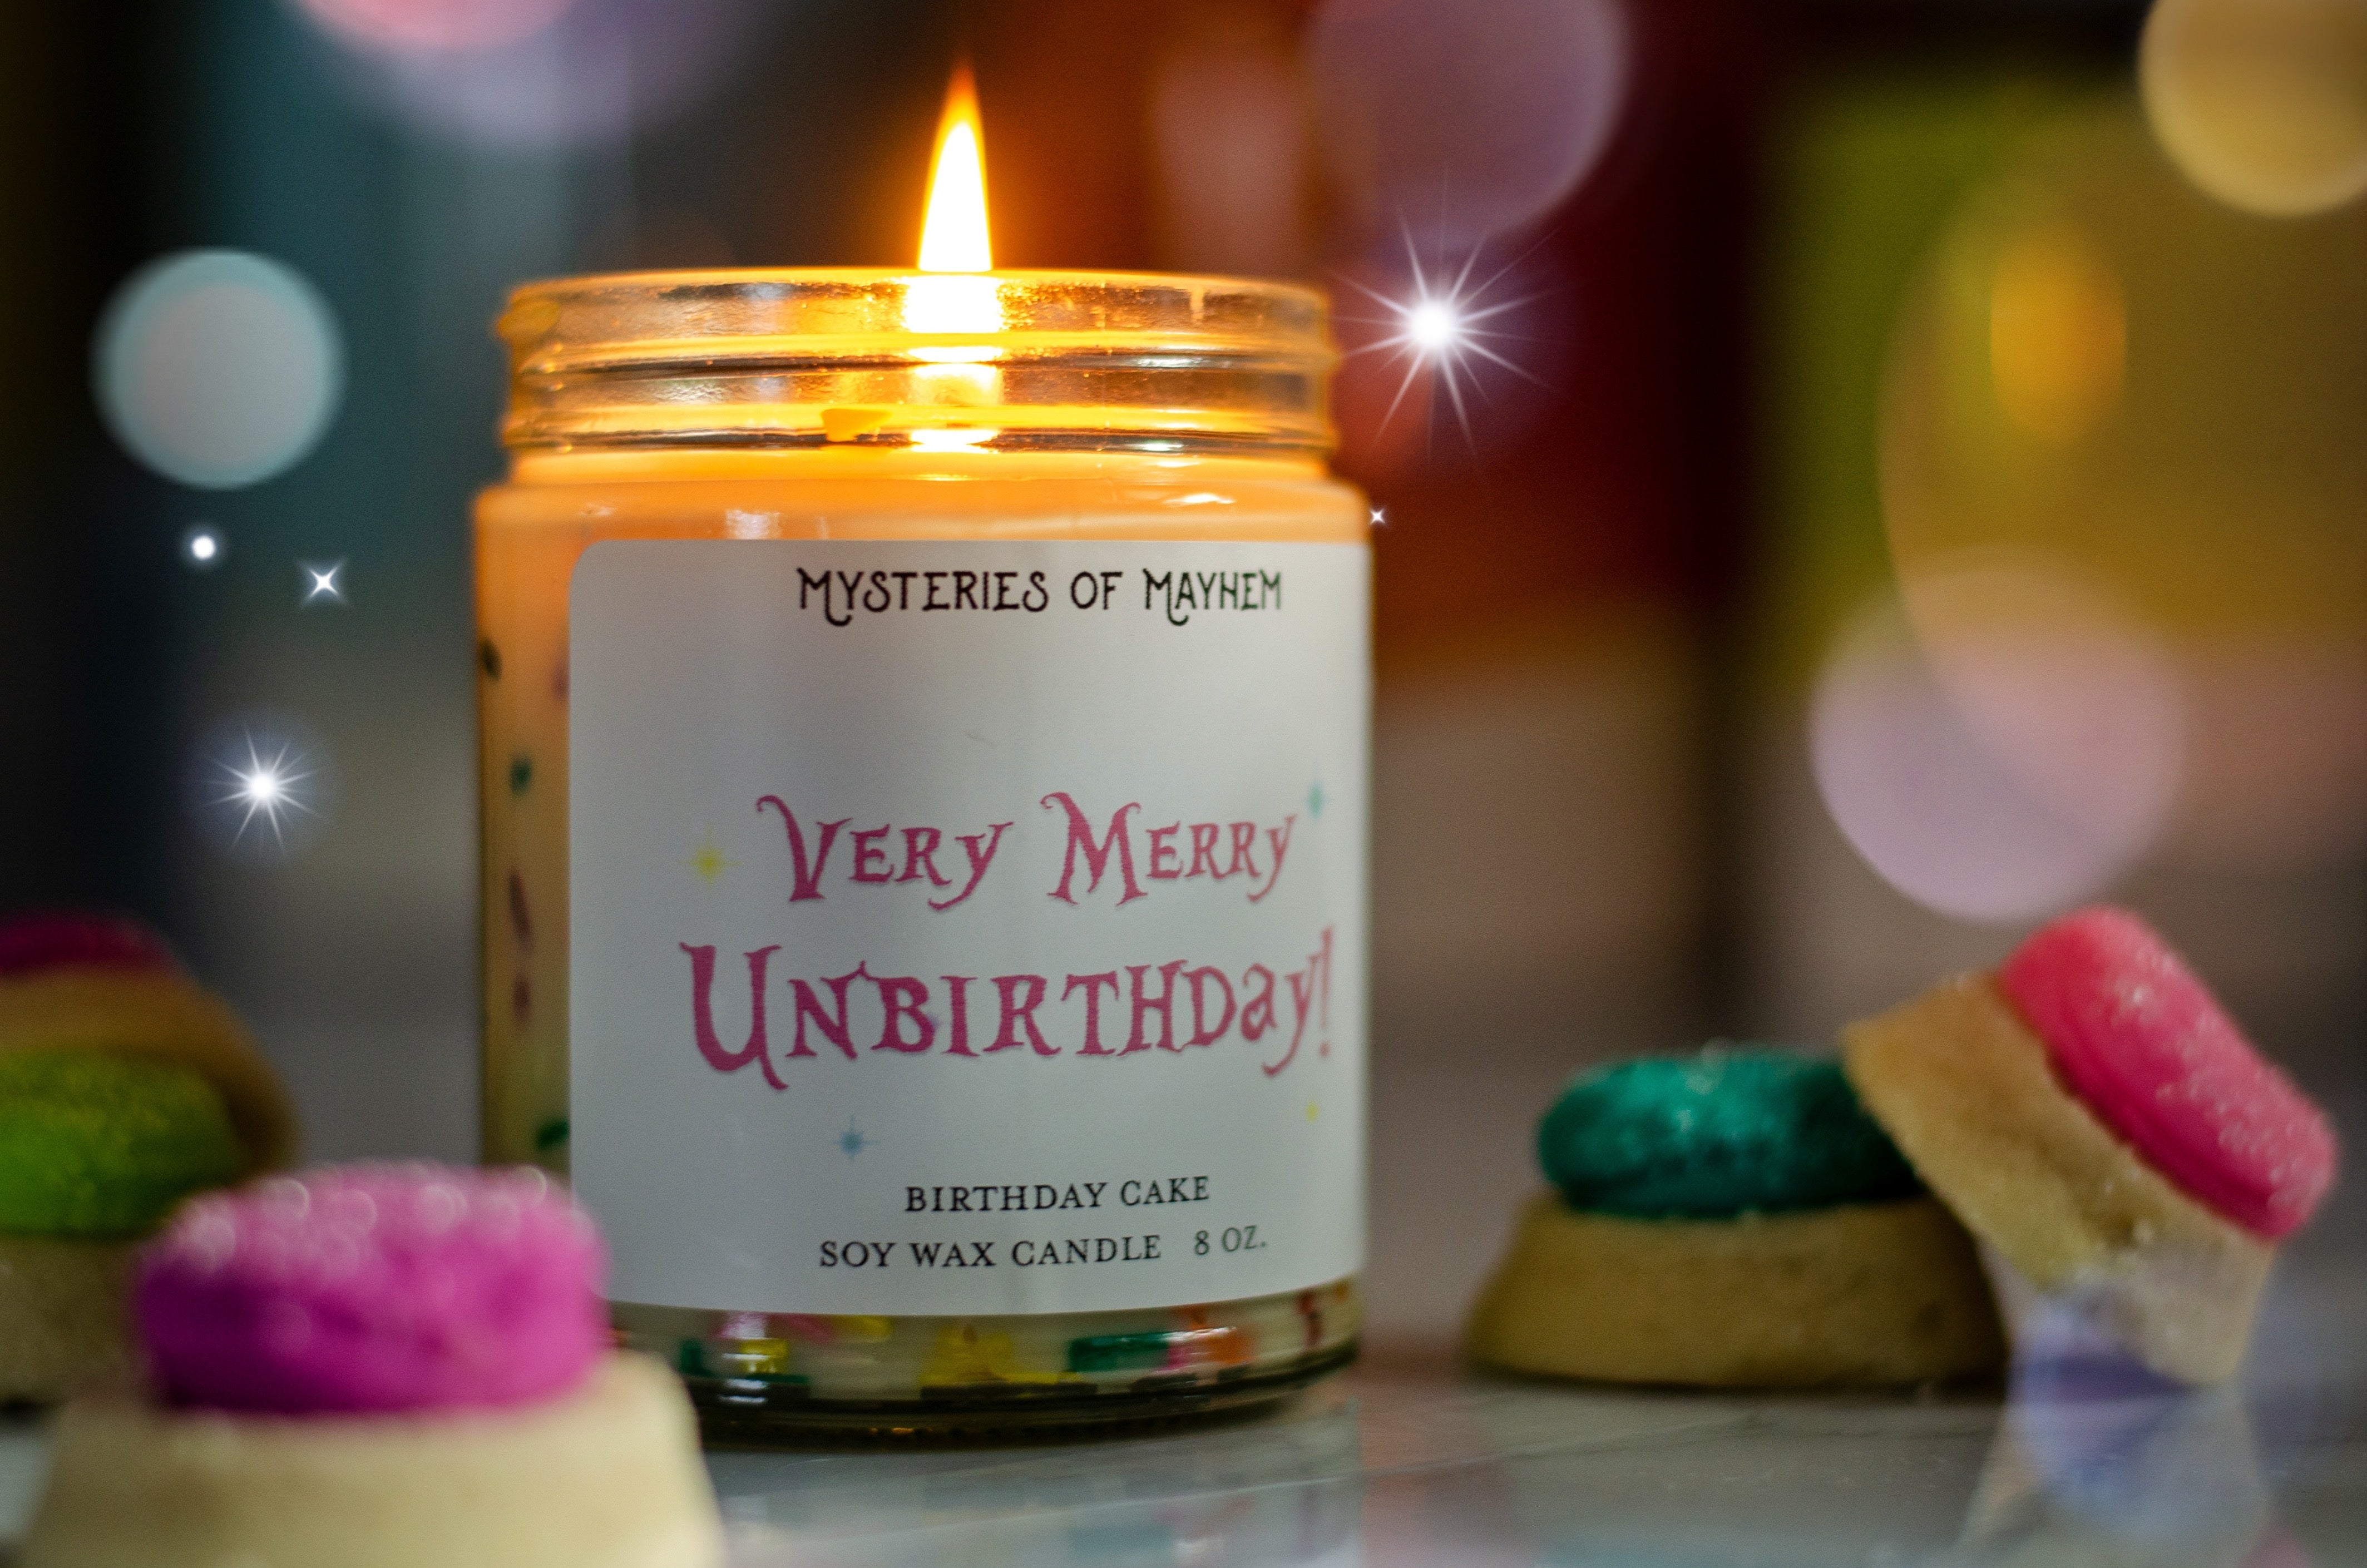 Very Merry Unbirthday! - Birthday Cake Scented